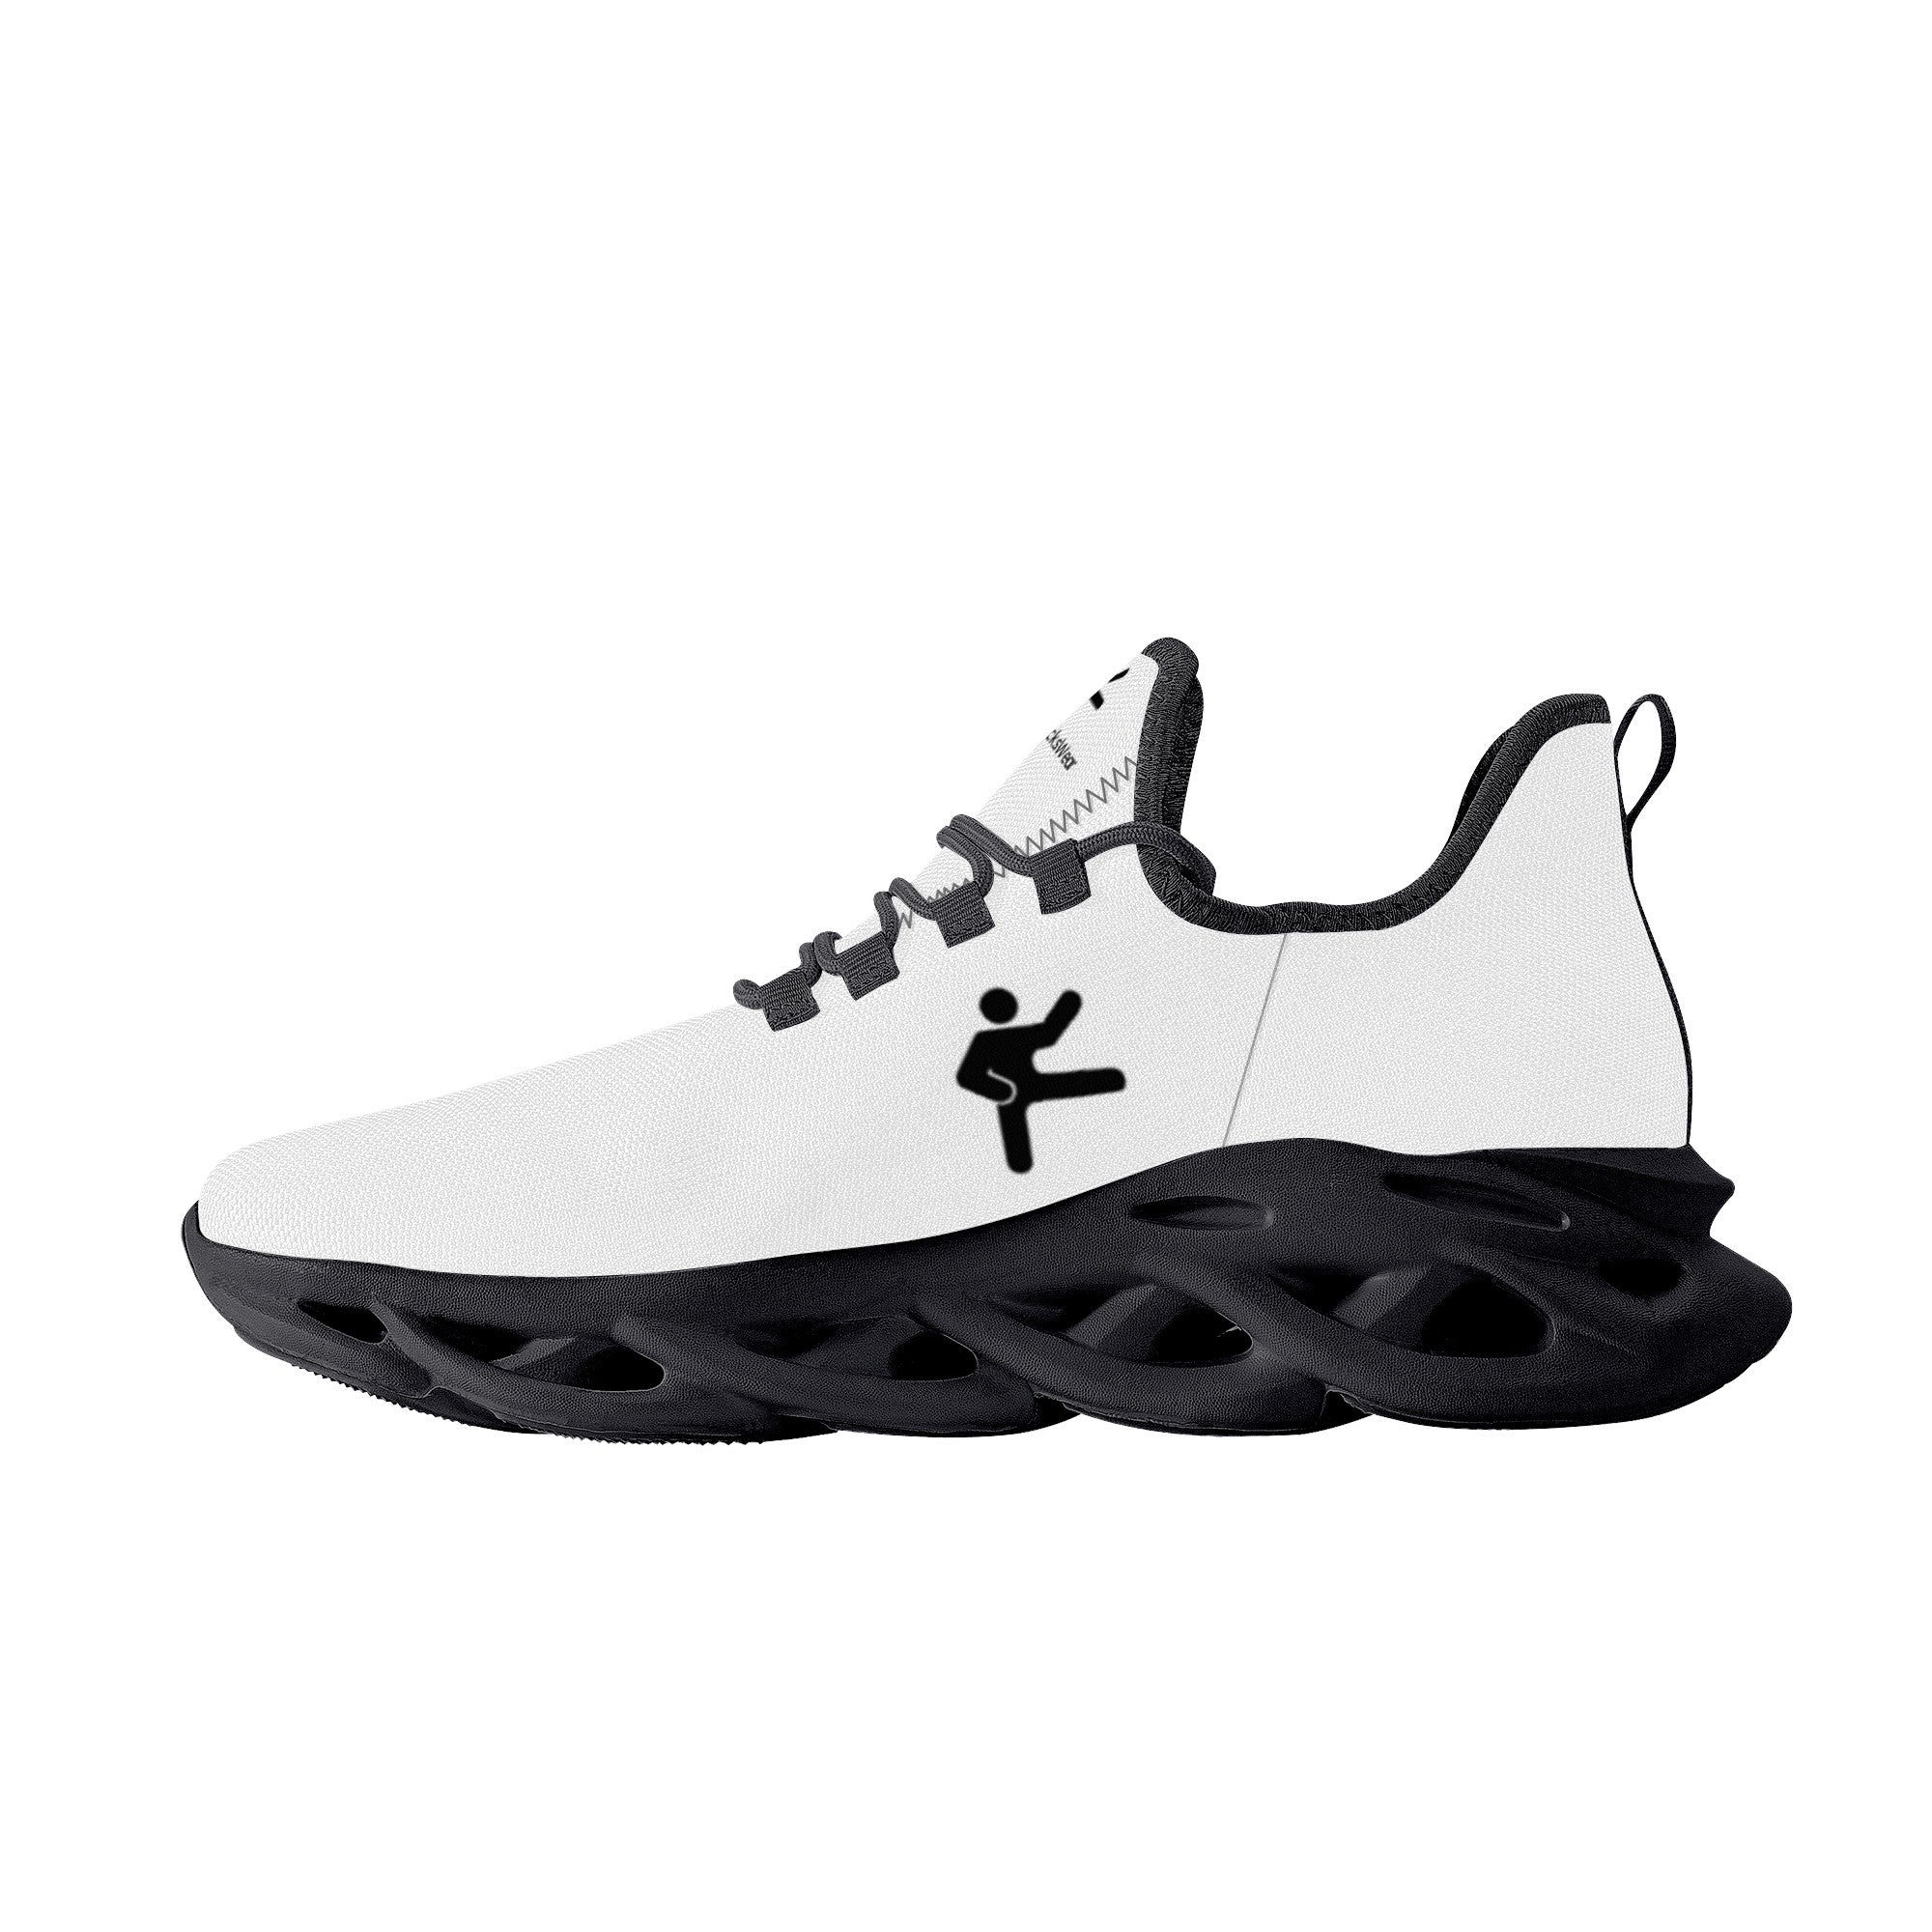 Just for Kicks - Flex Control Sneaker | High Top Customized | Shoe Zero